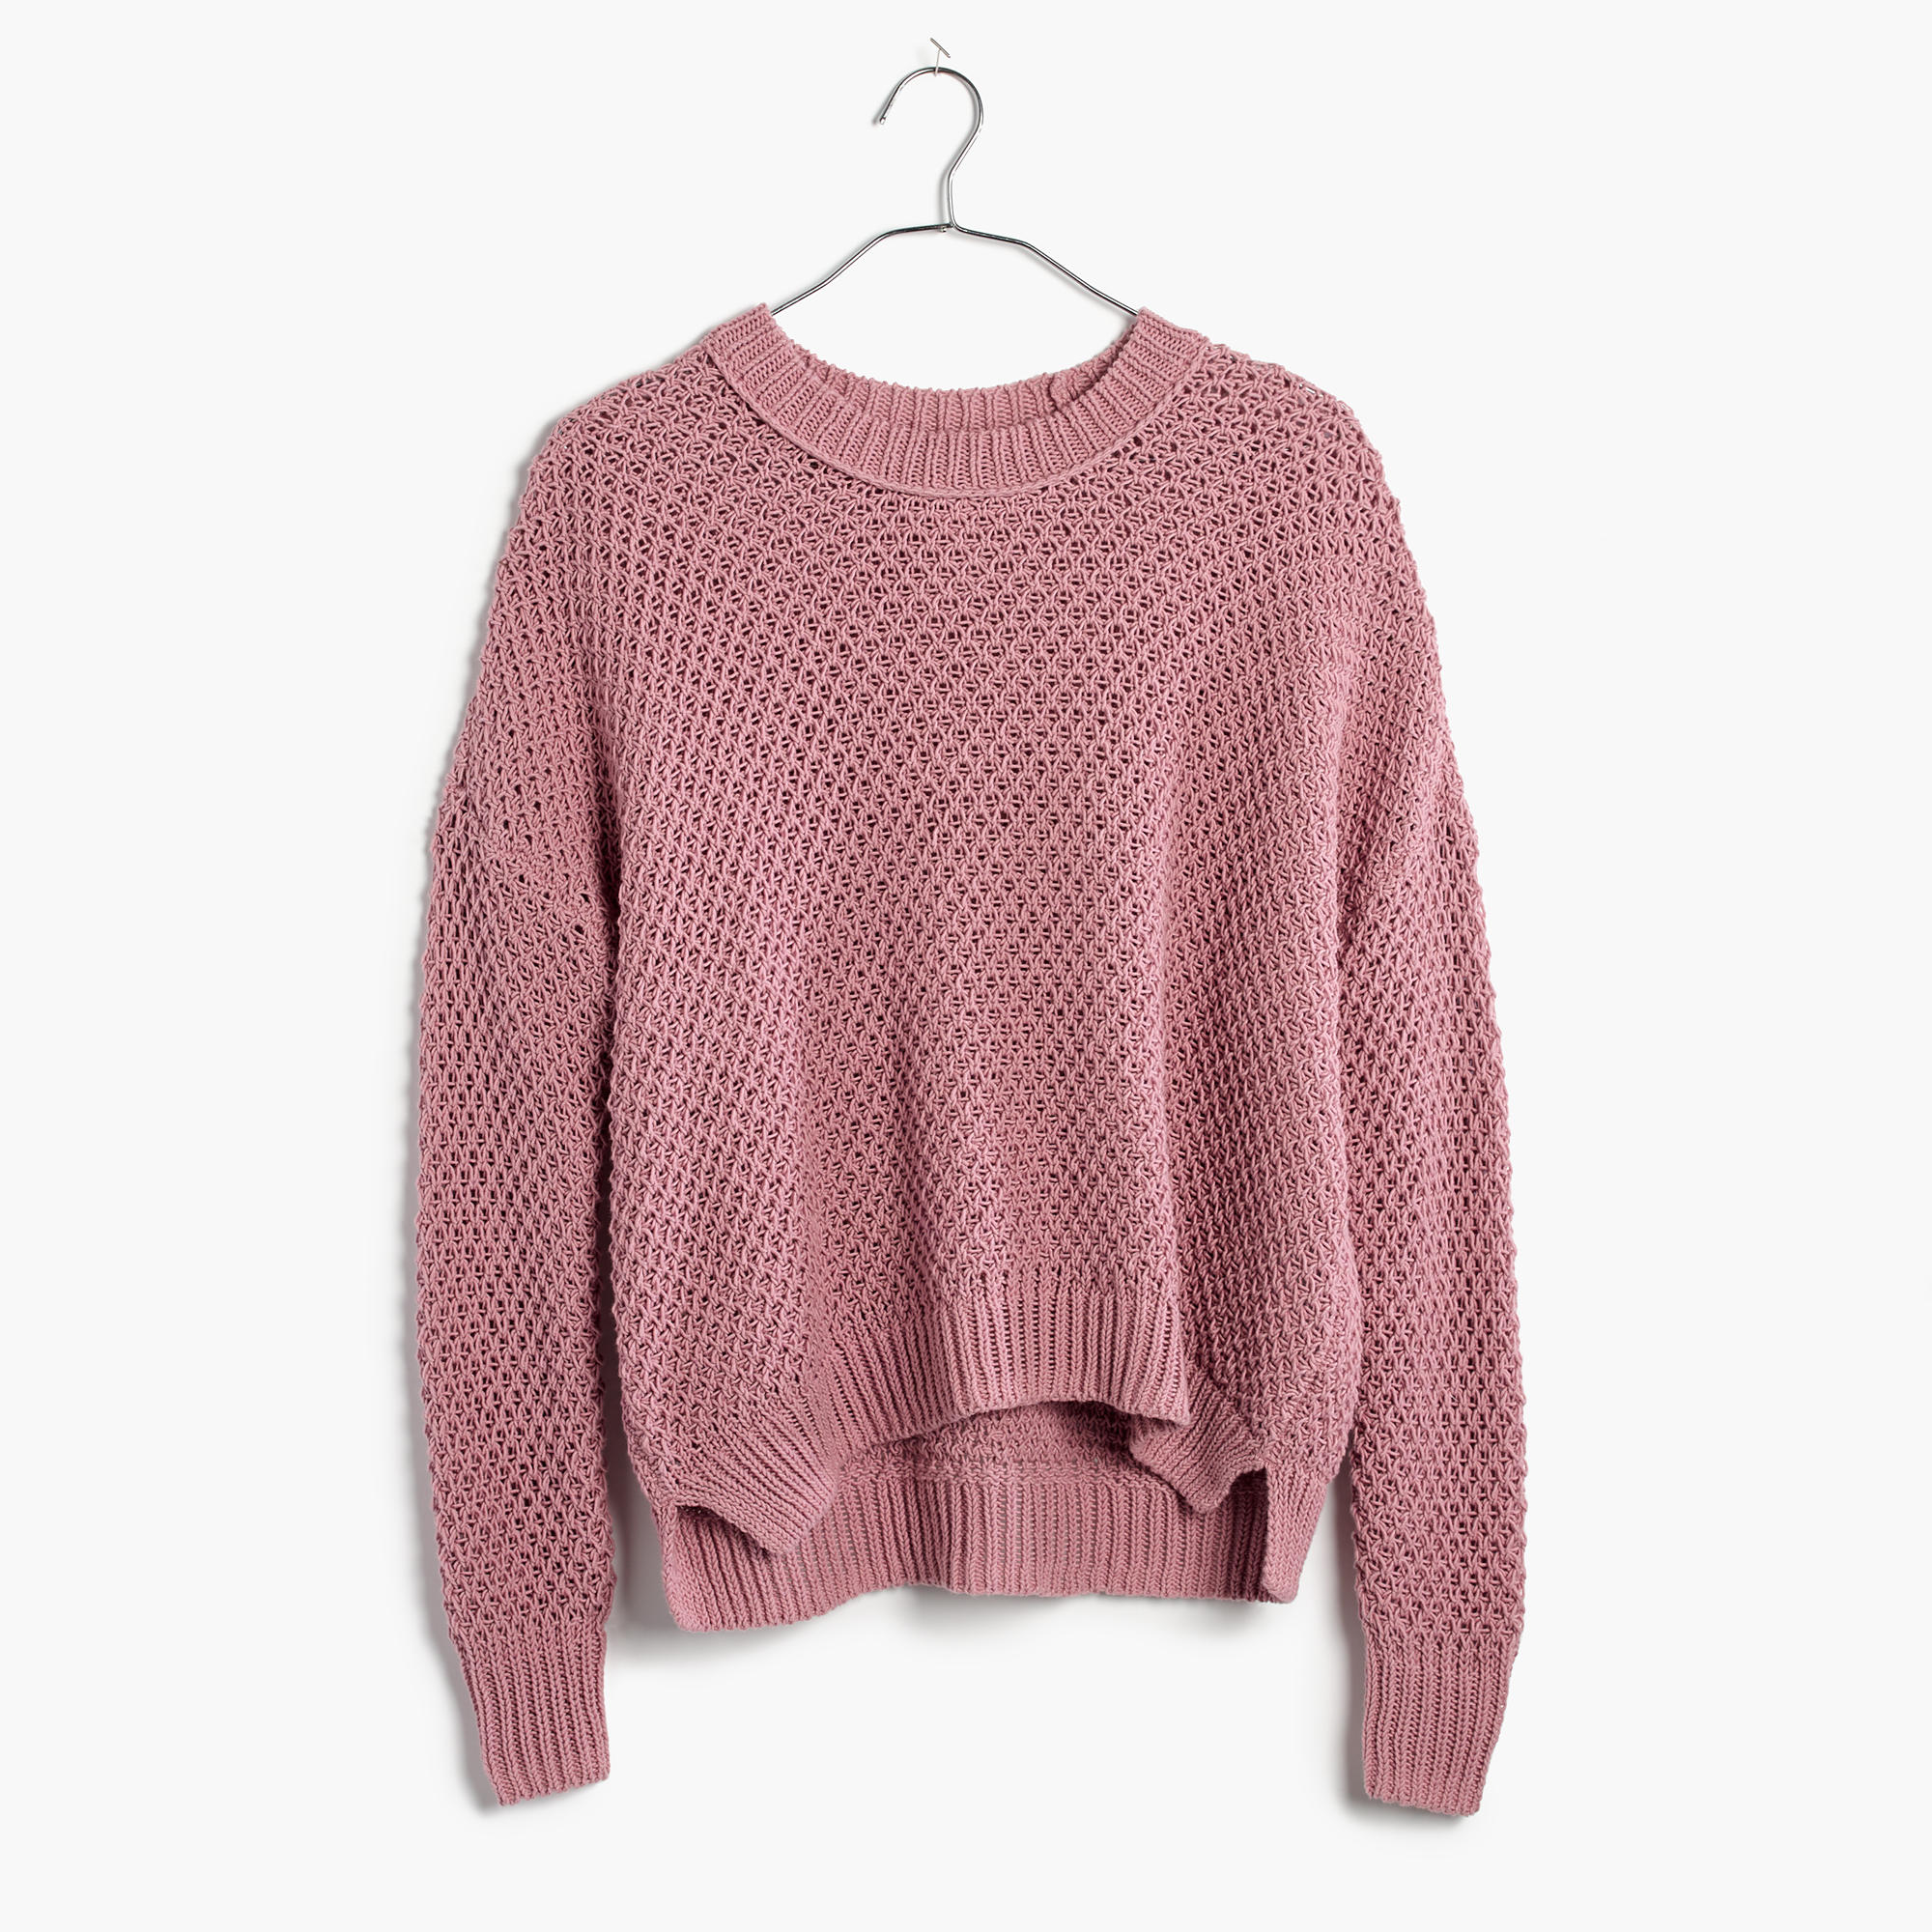 madewell sweater.jpeg